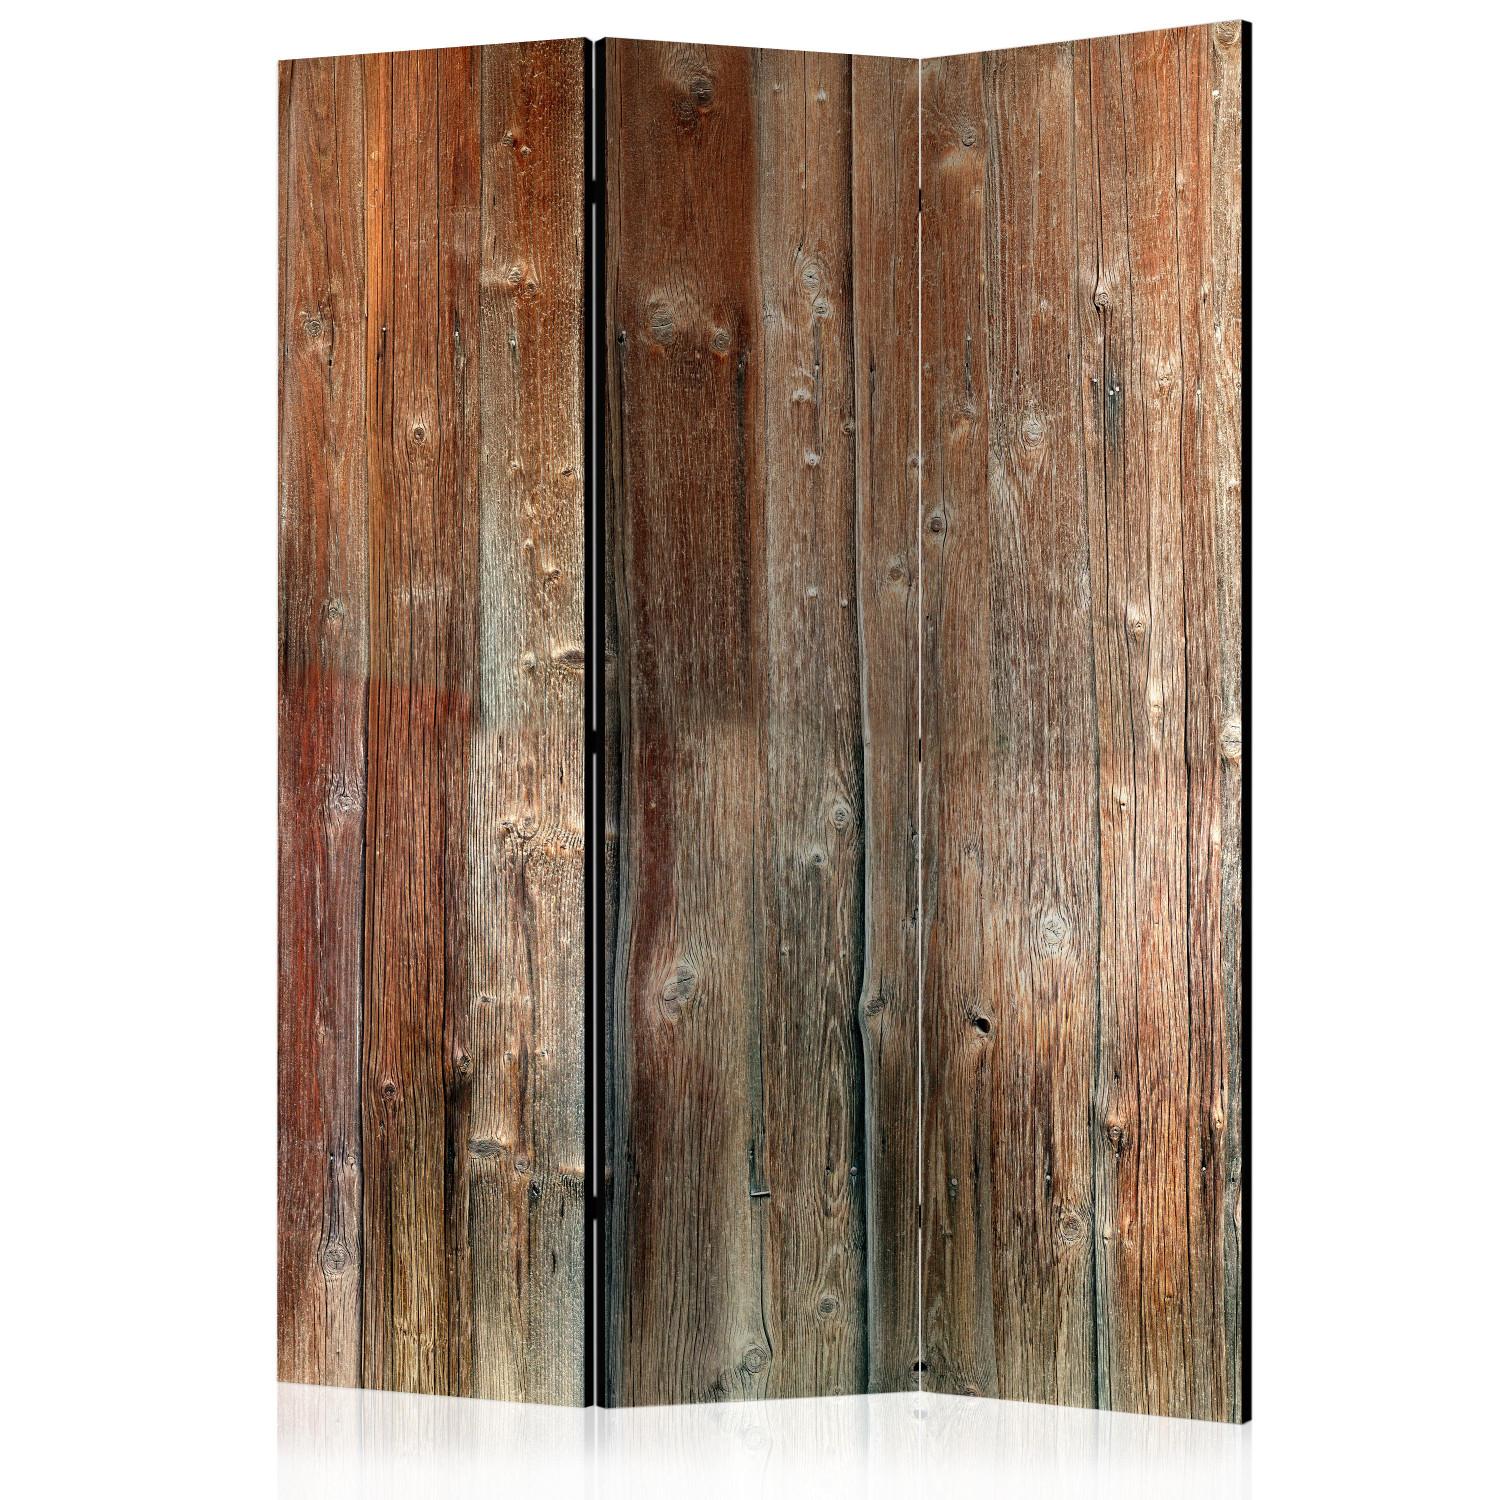 Biombo barato Casita bosque (3 partes): patrón marrón madera